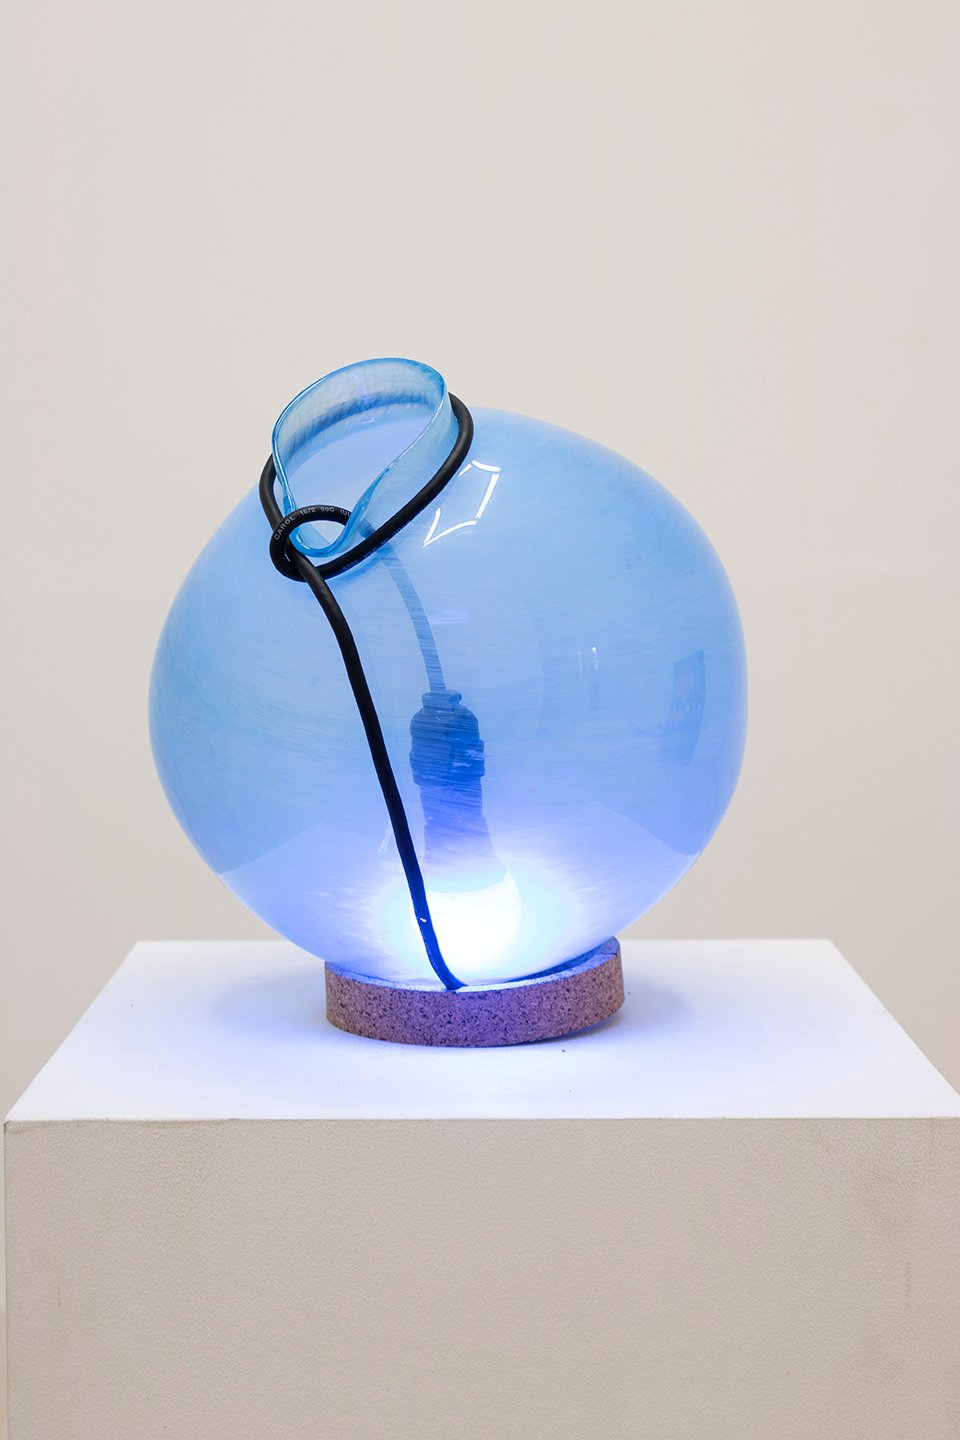 Elias Hansen, Light Sculpture, 2020